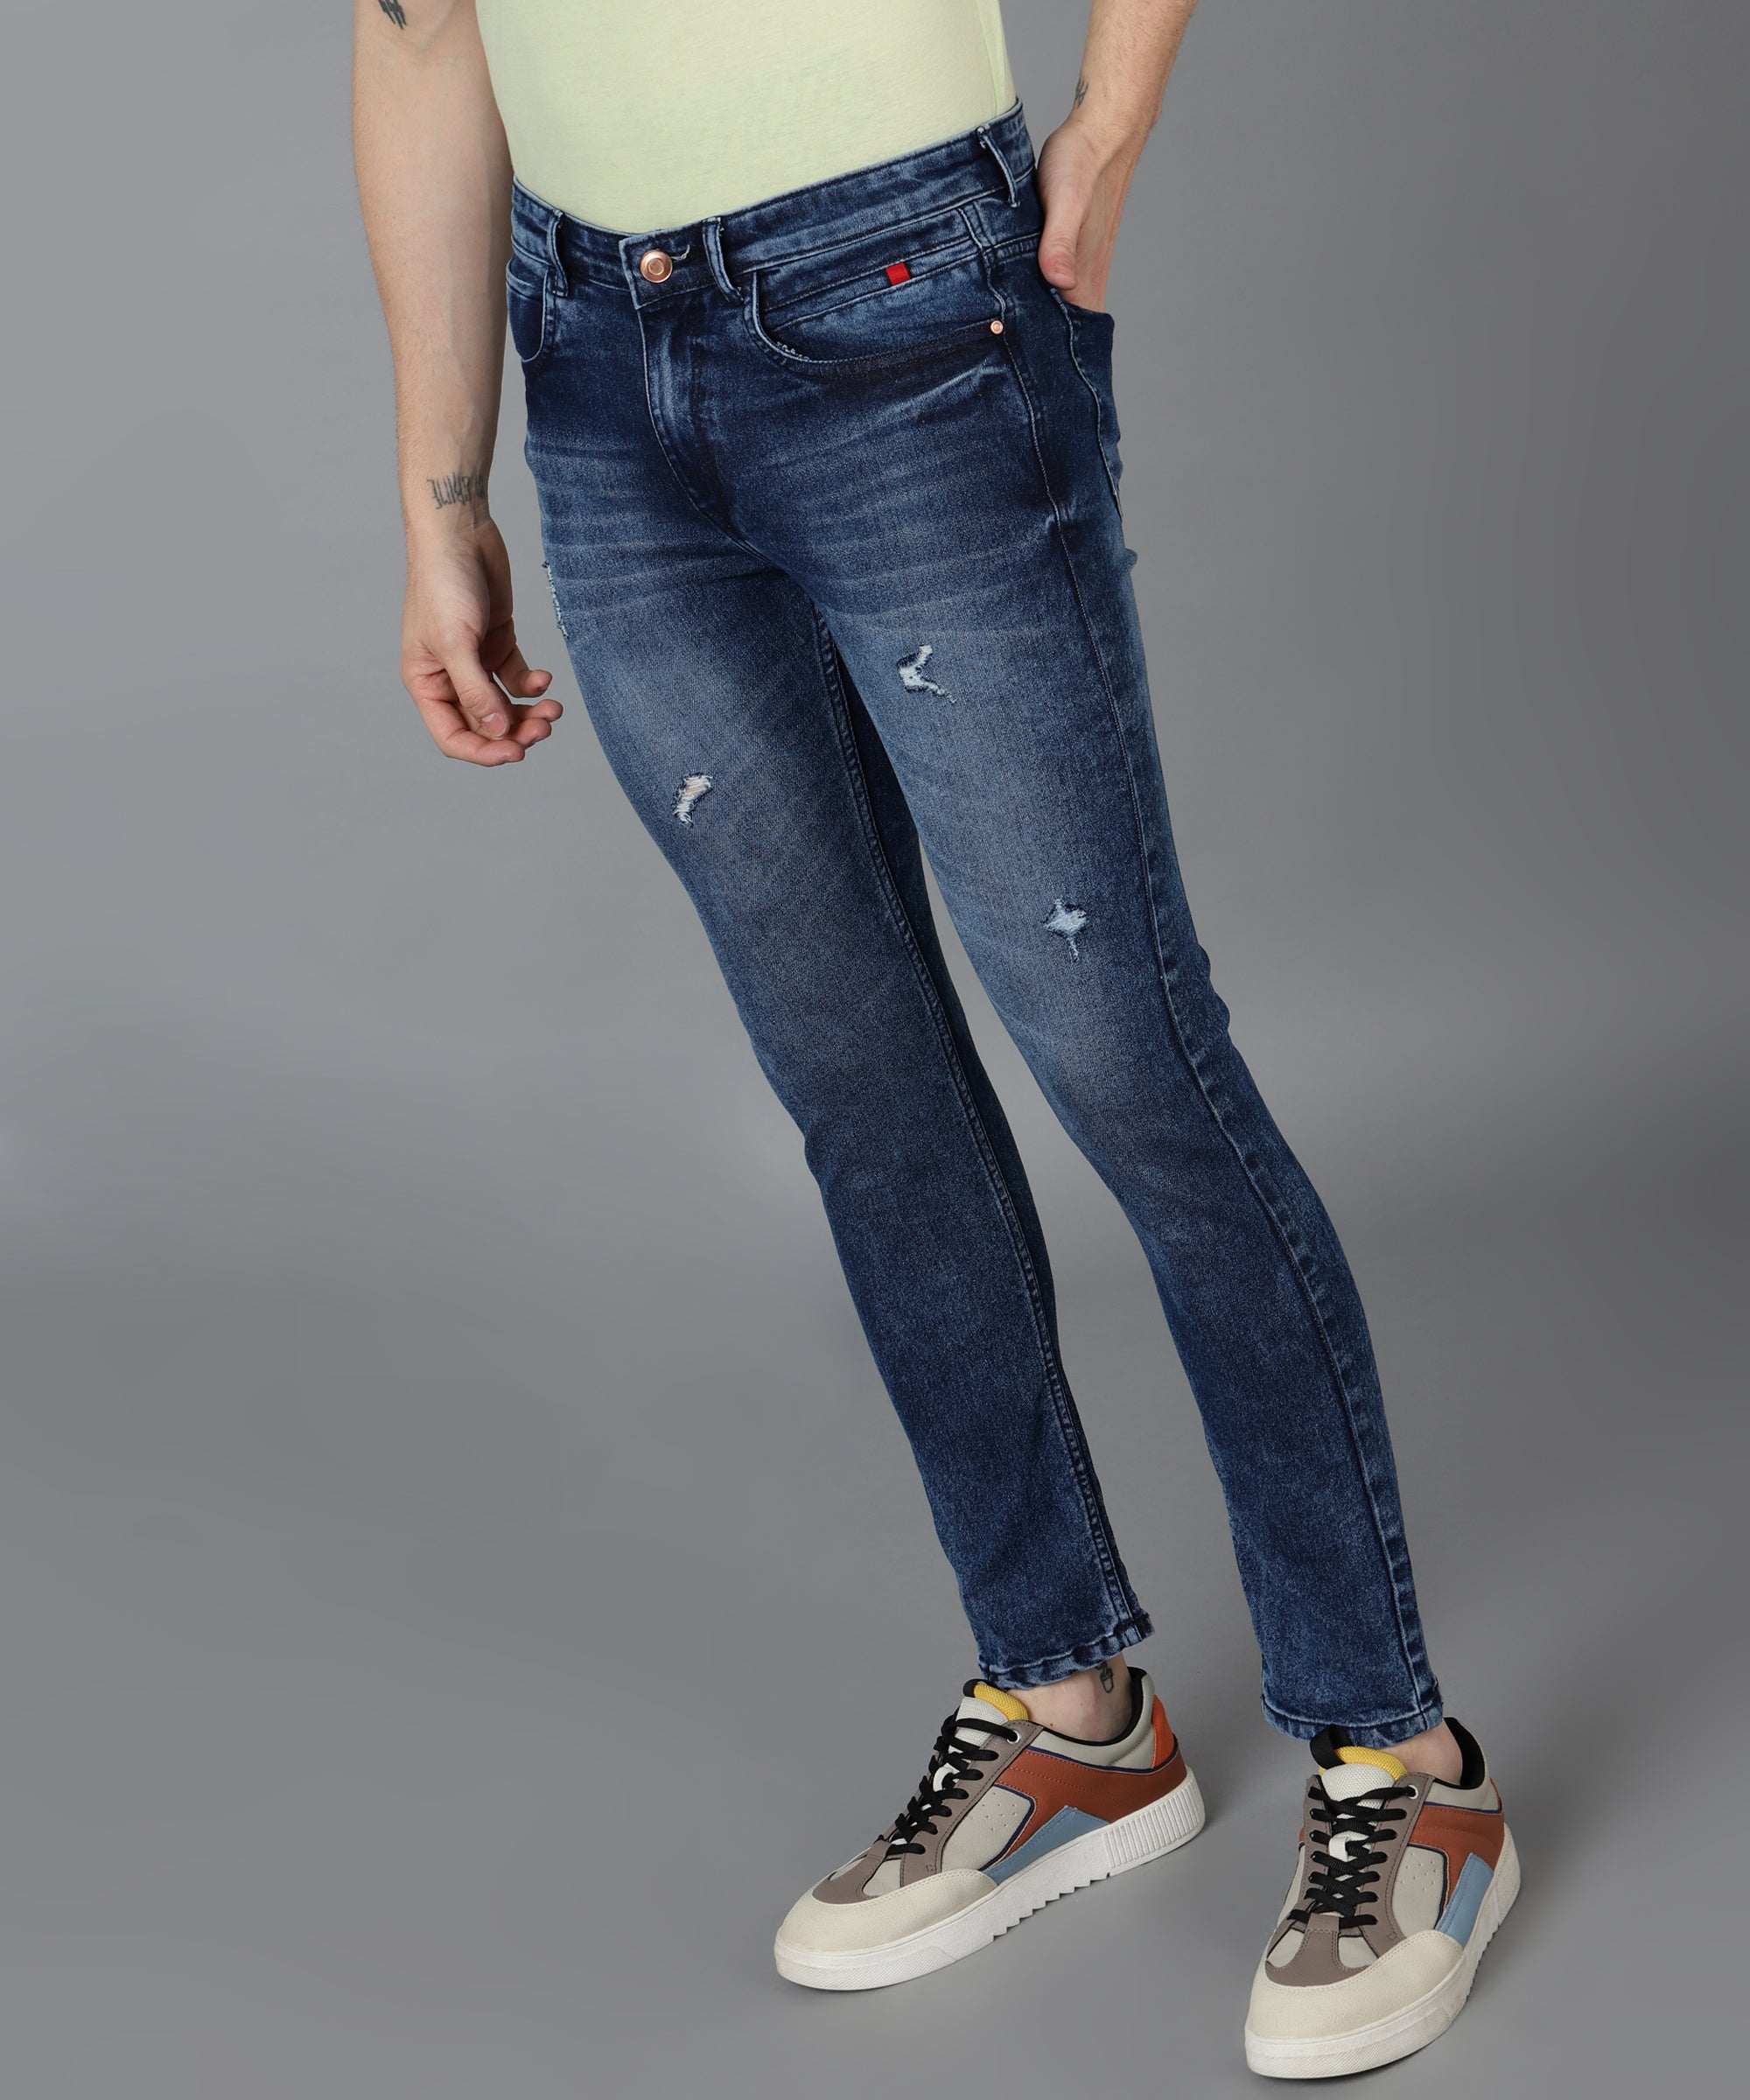 Urbano Fashion Men's Navy Slim Fit Mild Distressed/Torn Jeans Stretchable